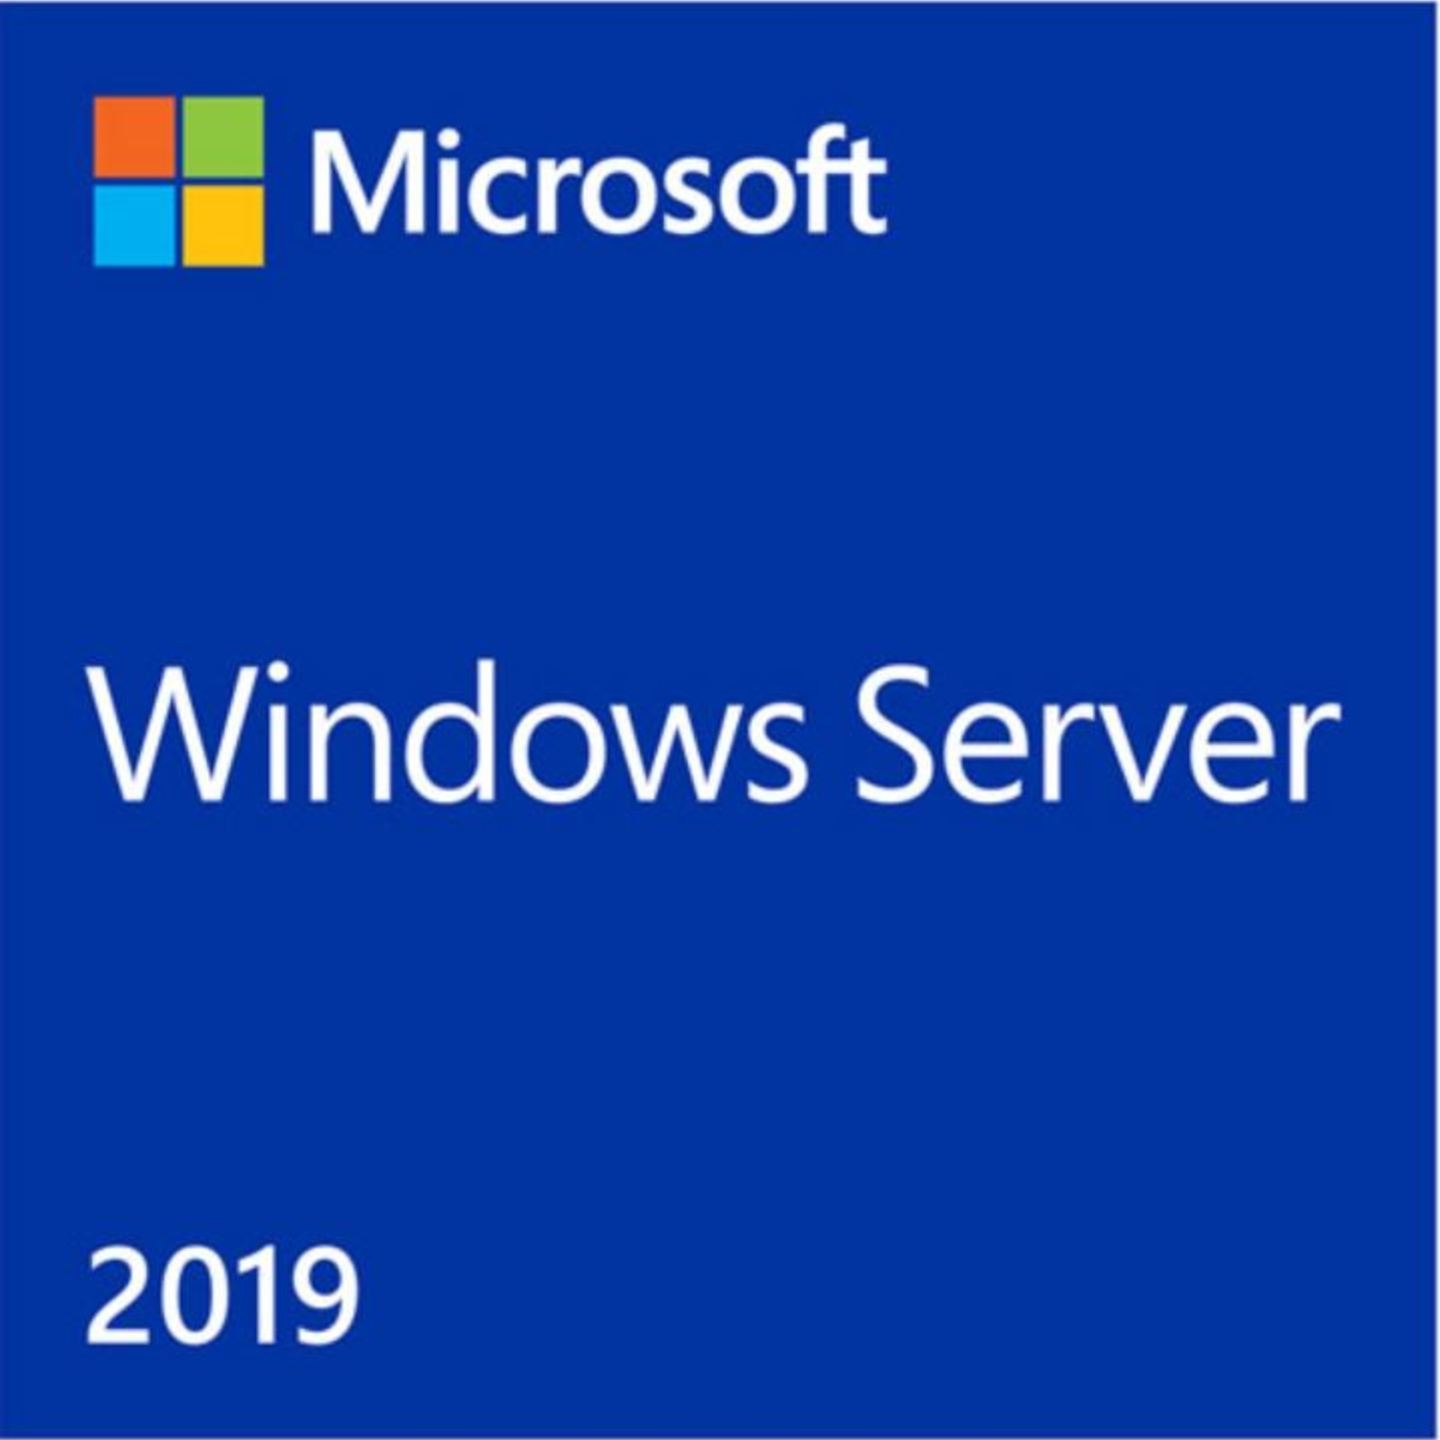 Windows Server Standard 2019 bundled with 5 CALs